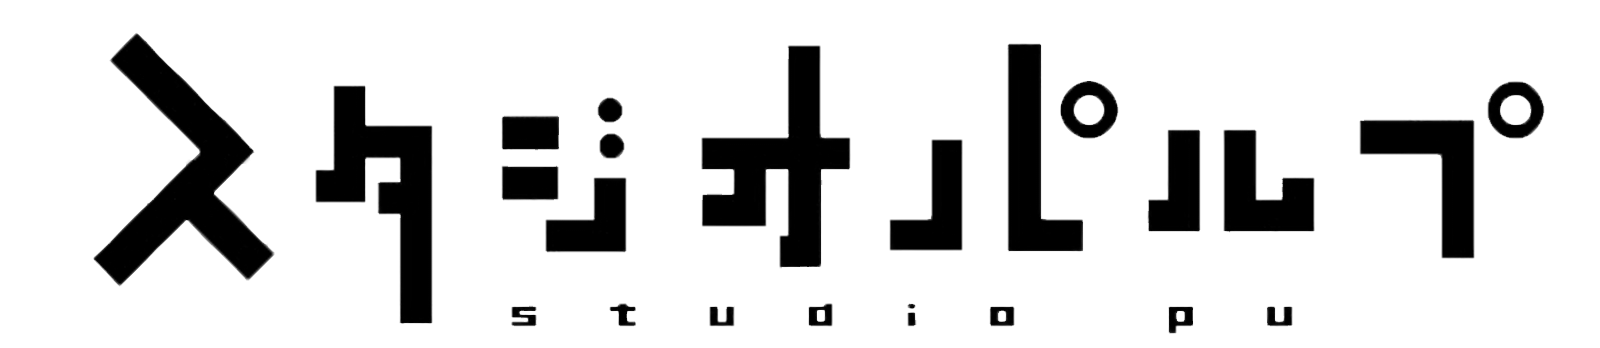 Studio pulp logo.png